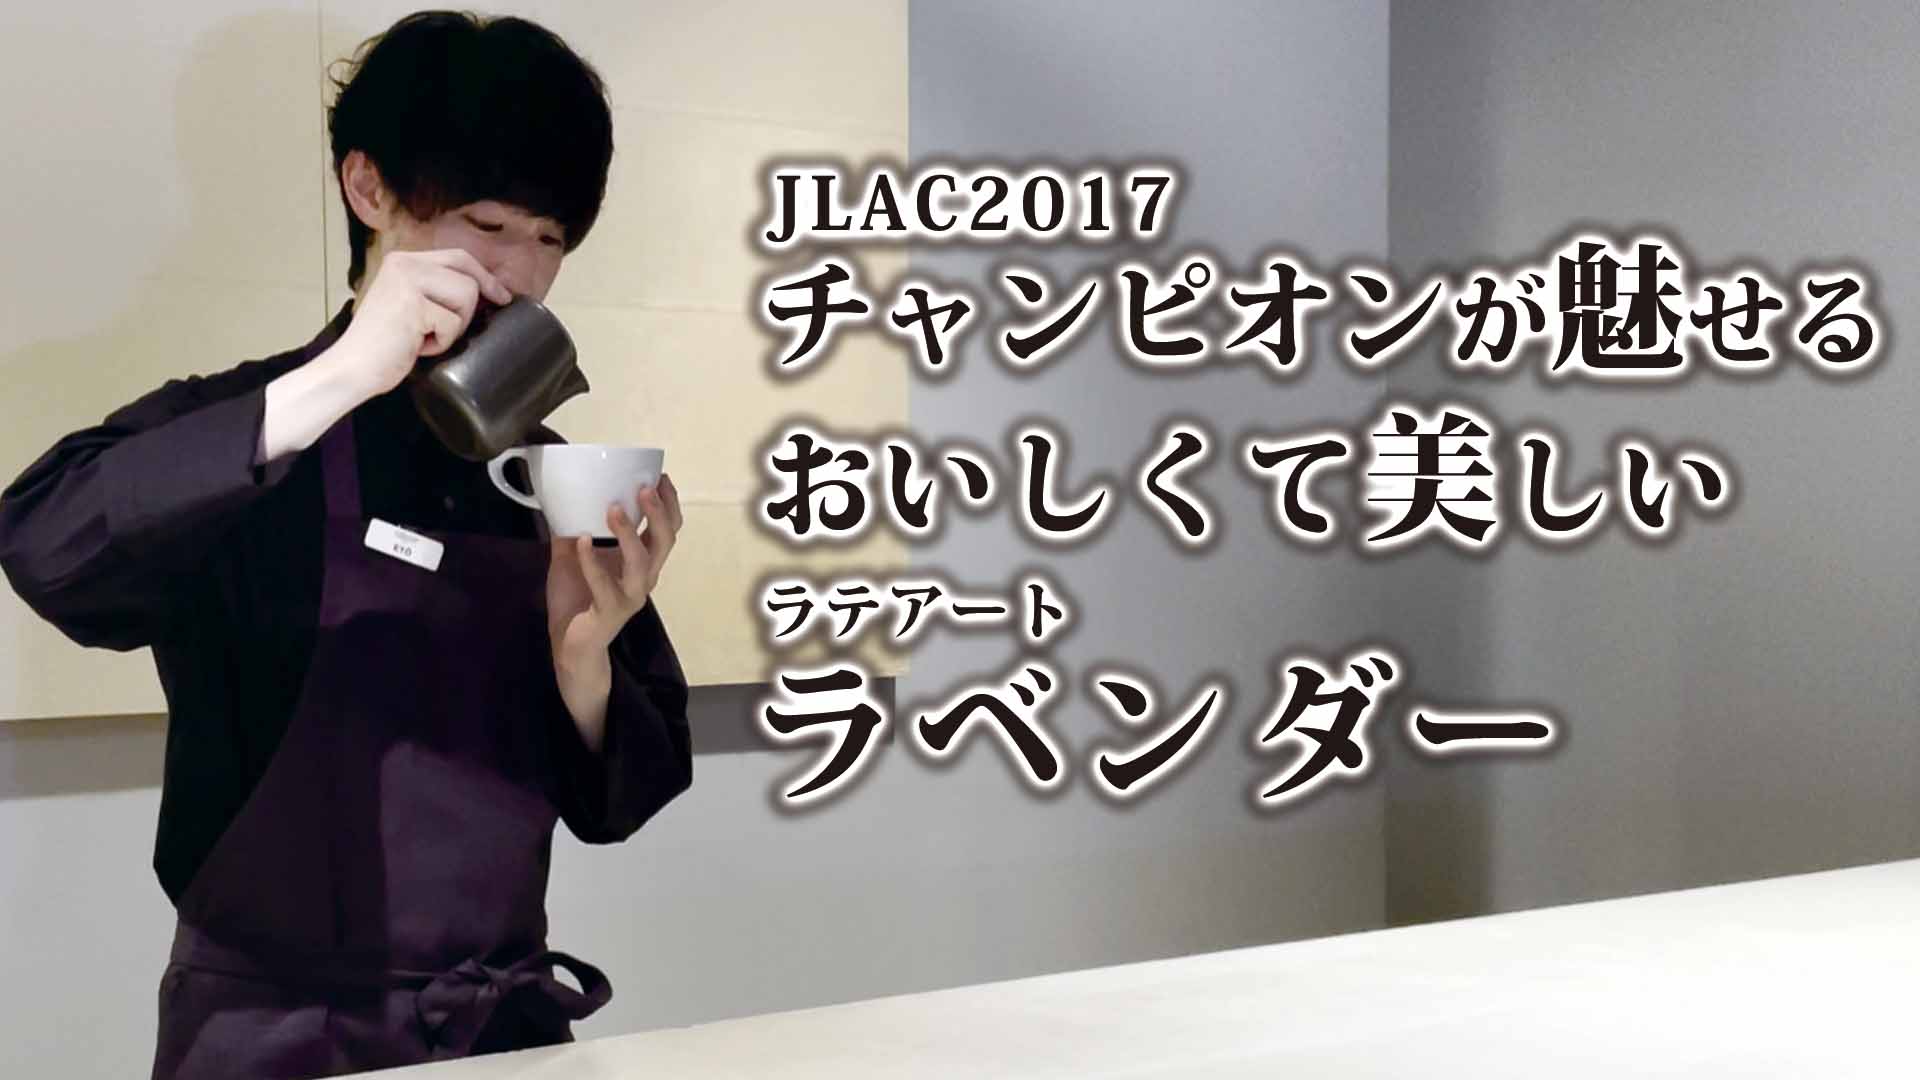 YOUTUBE：【ラテアート】JLAC2017チャンピオンOGAWA COFFEE LABORATORY衛藤バリスタがラ白馬ラテアートの紹介